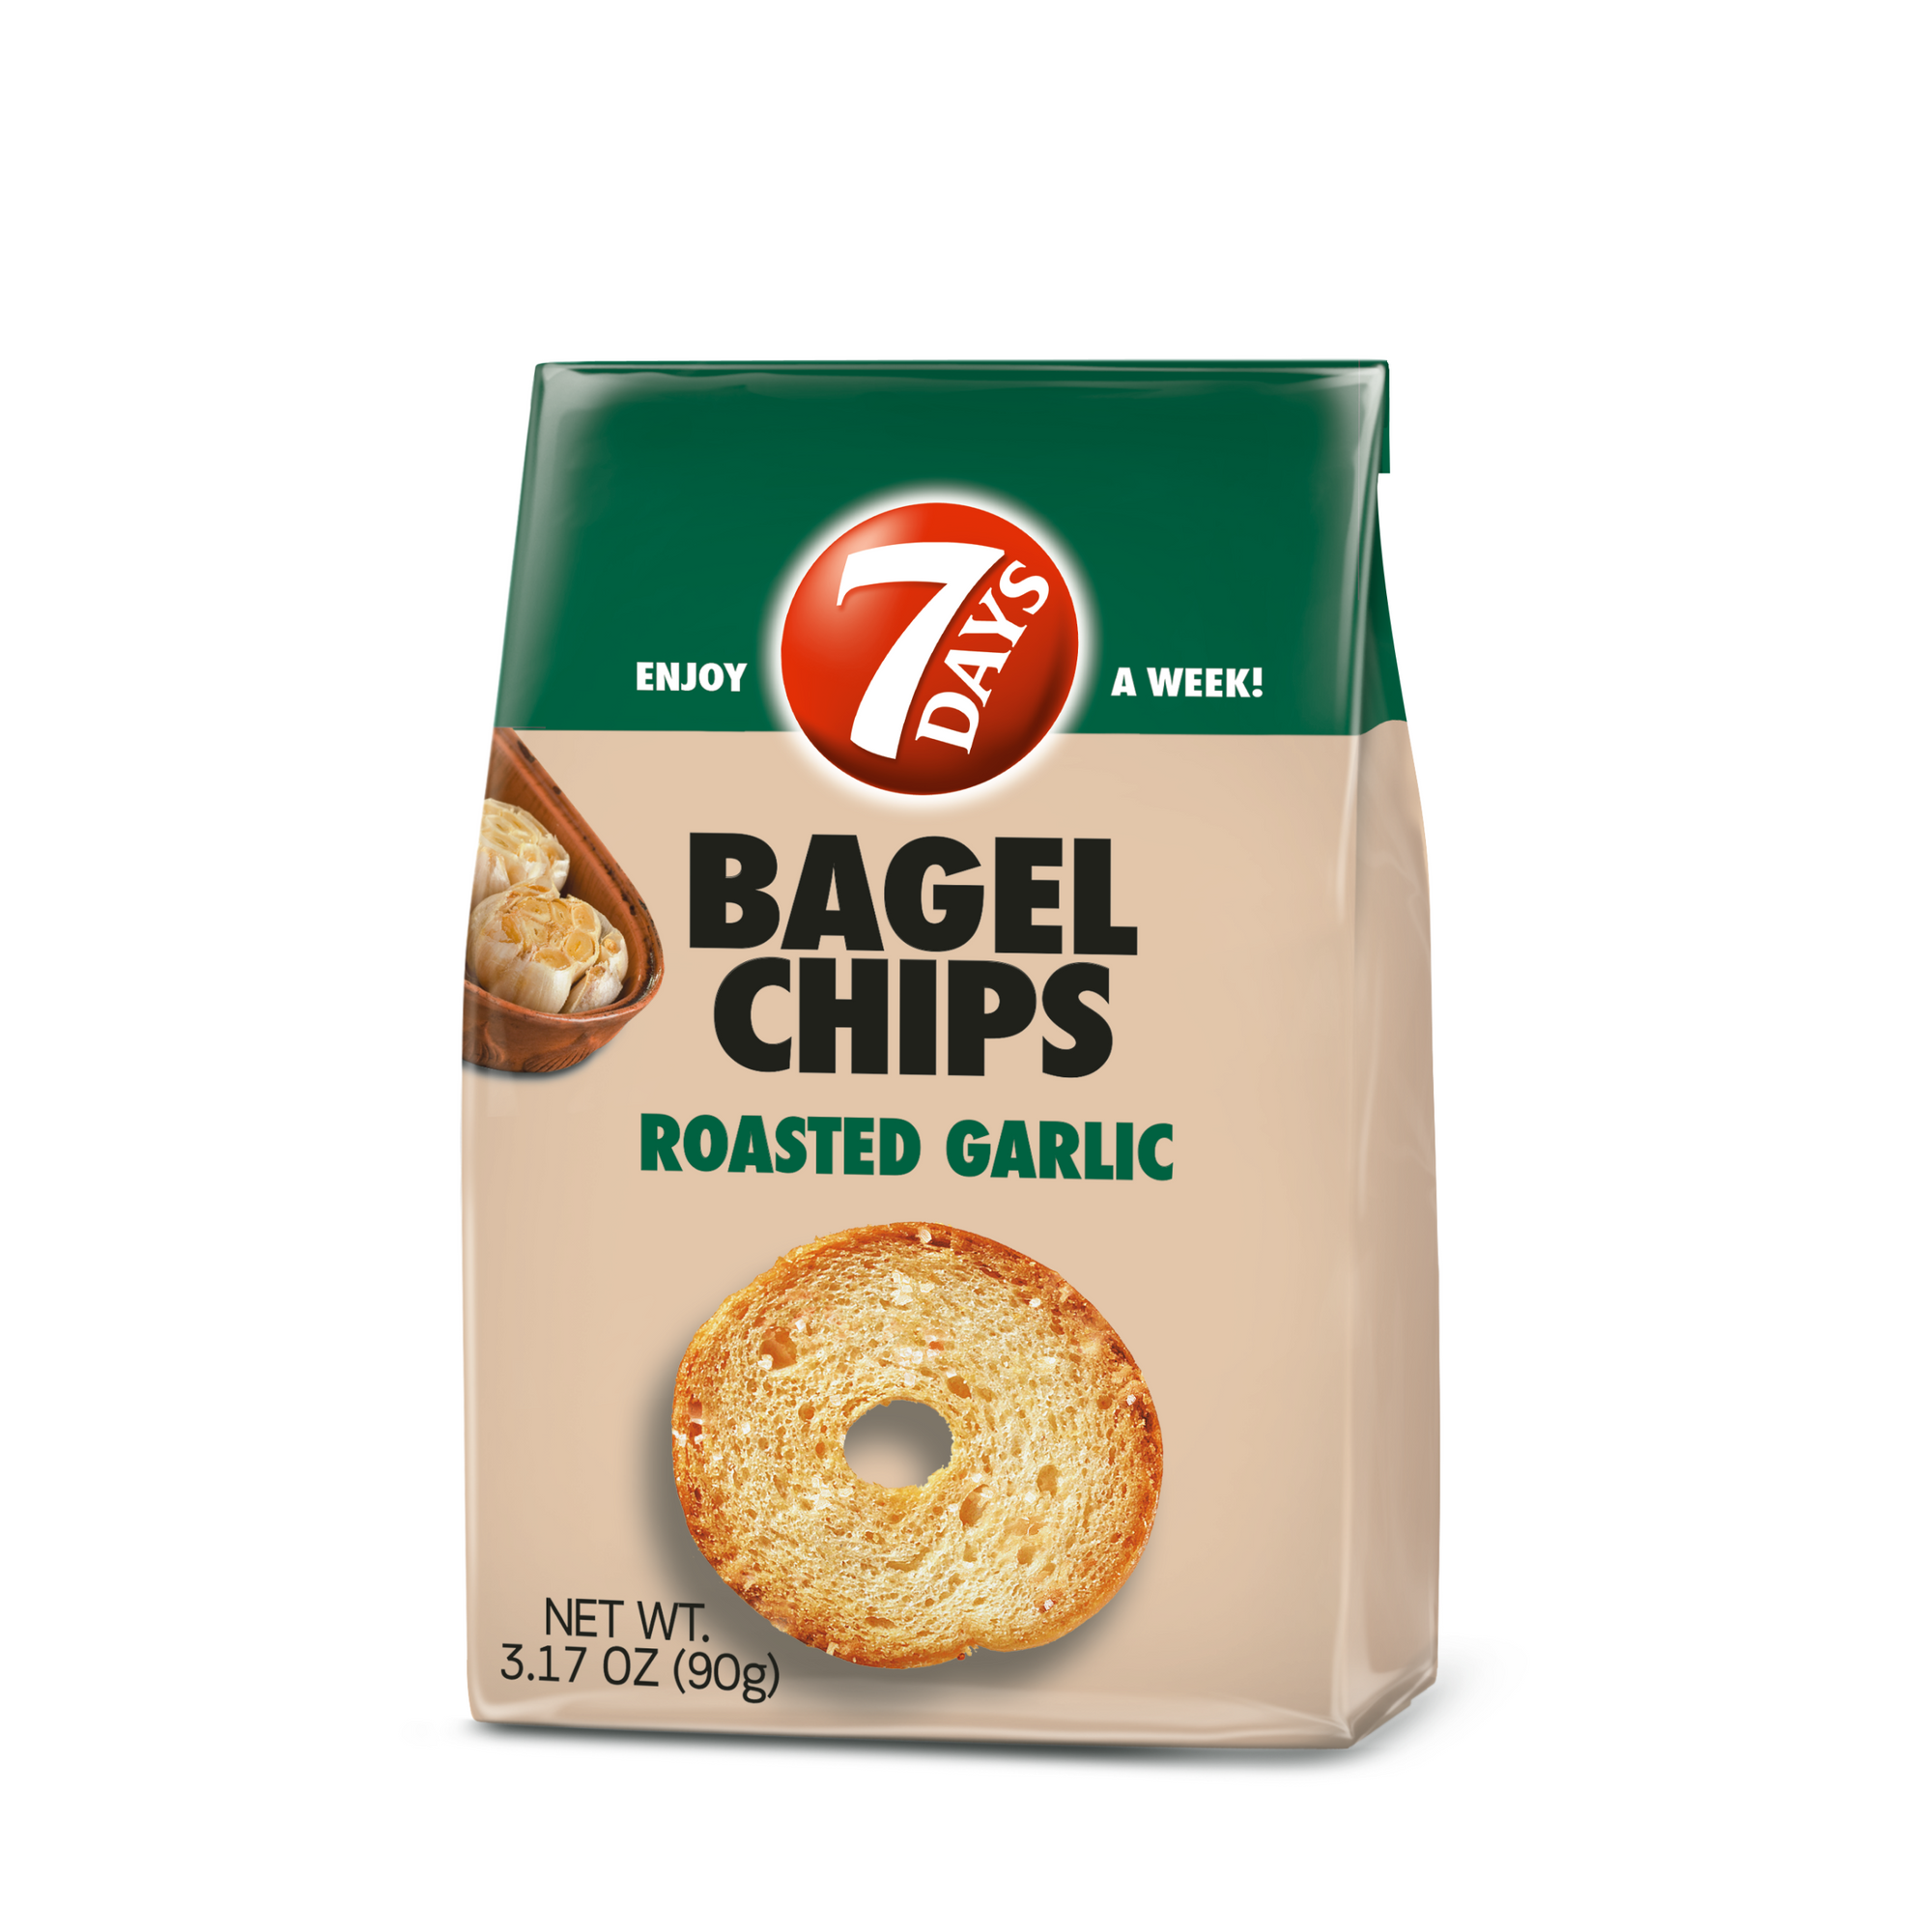 garlic bagel chips 3.1oz